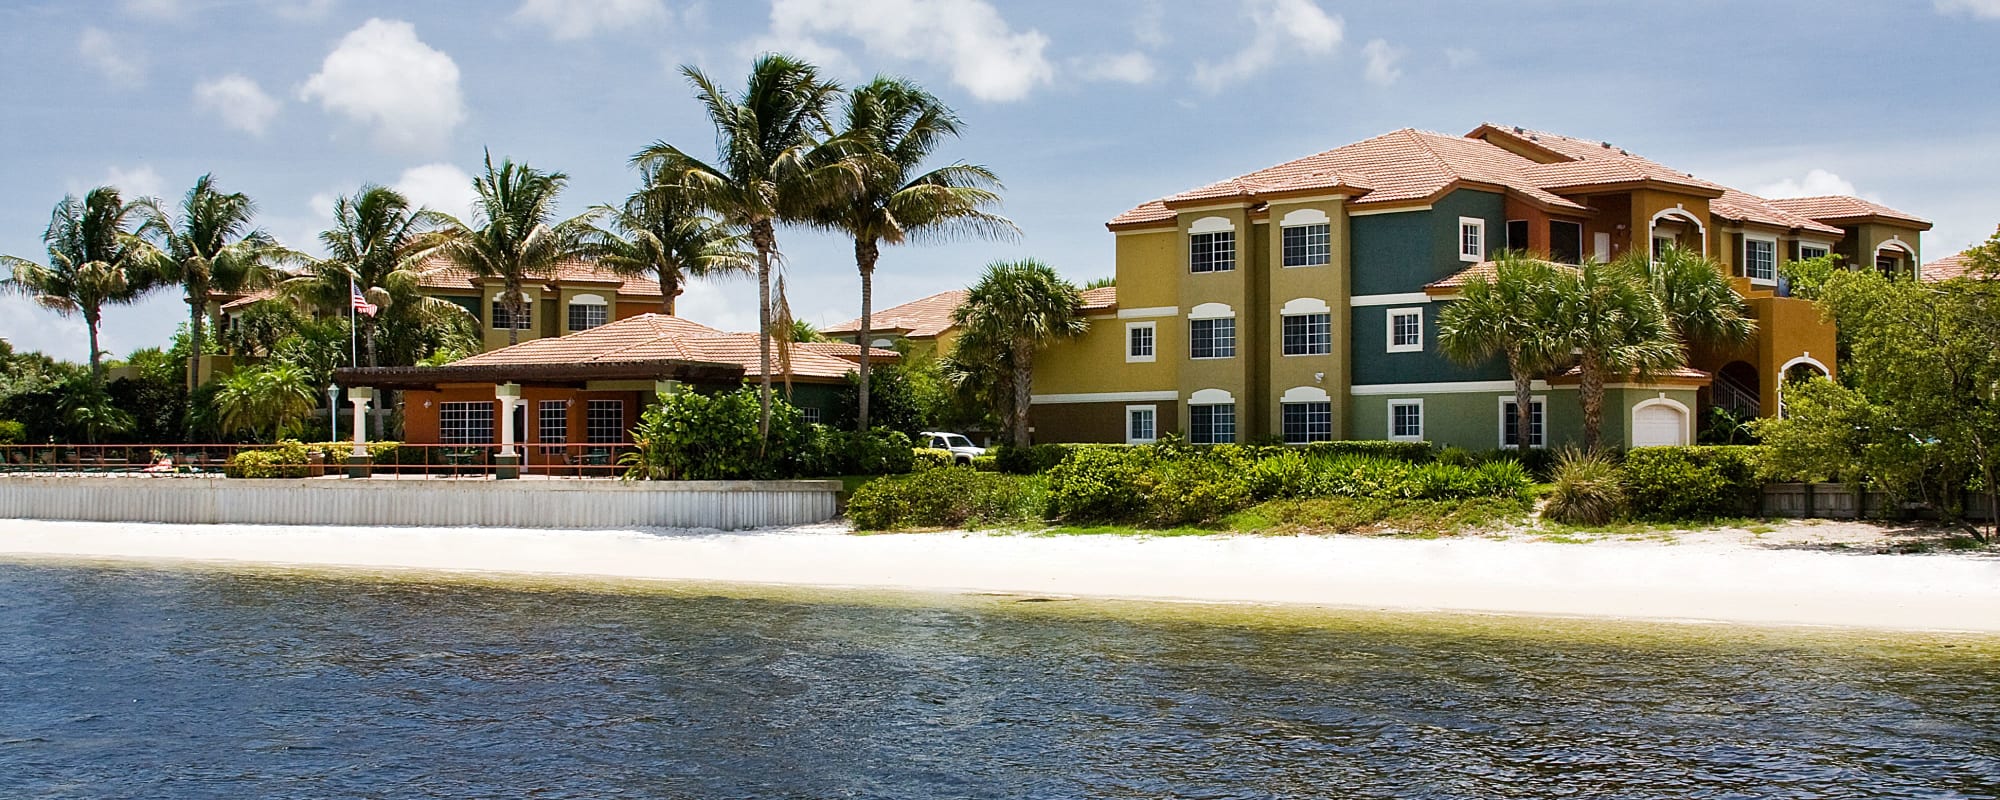 Residents of Manatee Bay Apartments in Boynton Beach, Florida